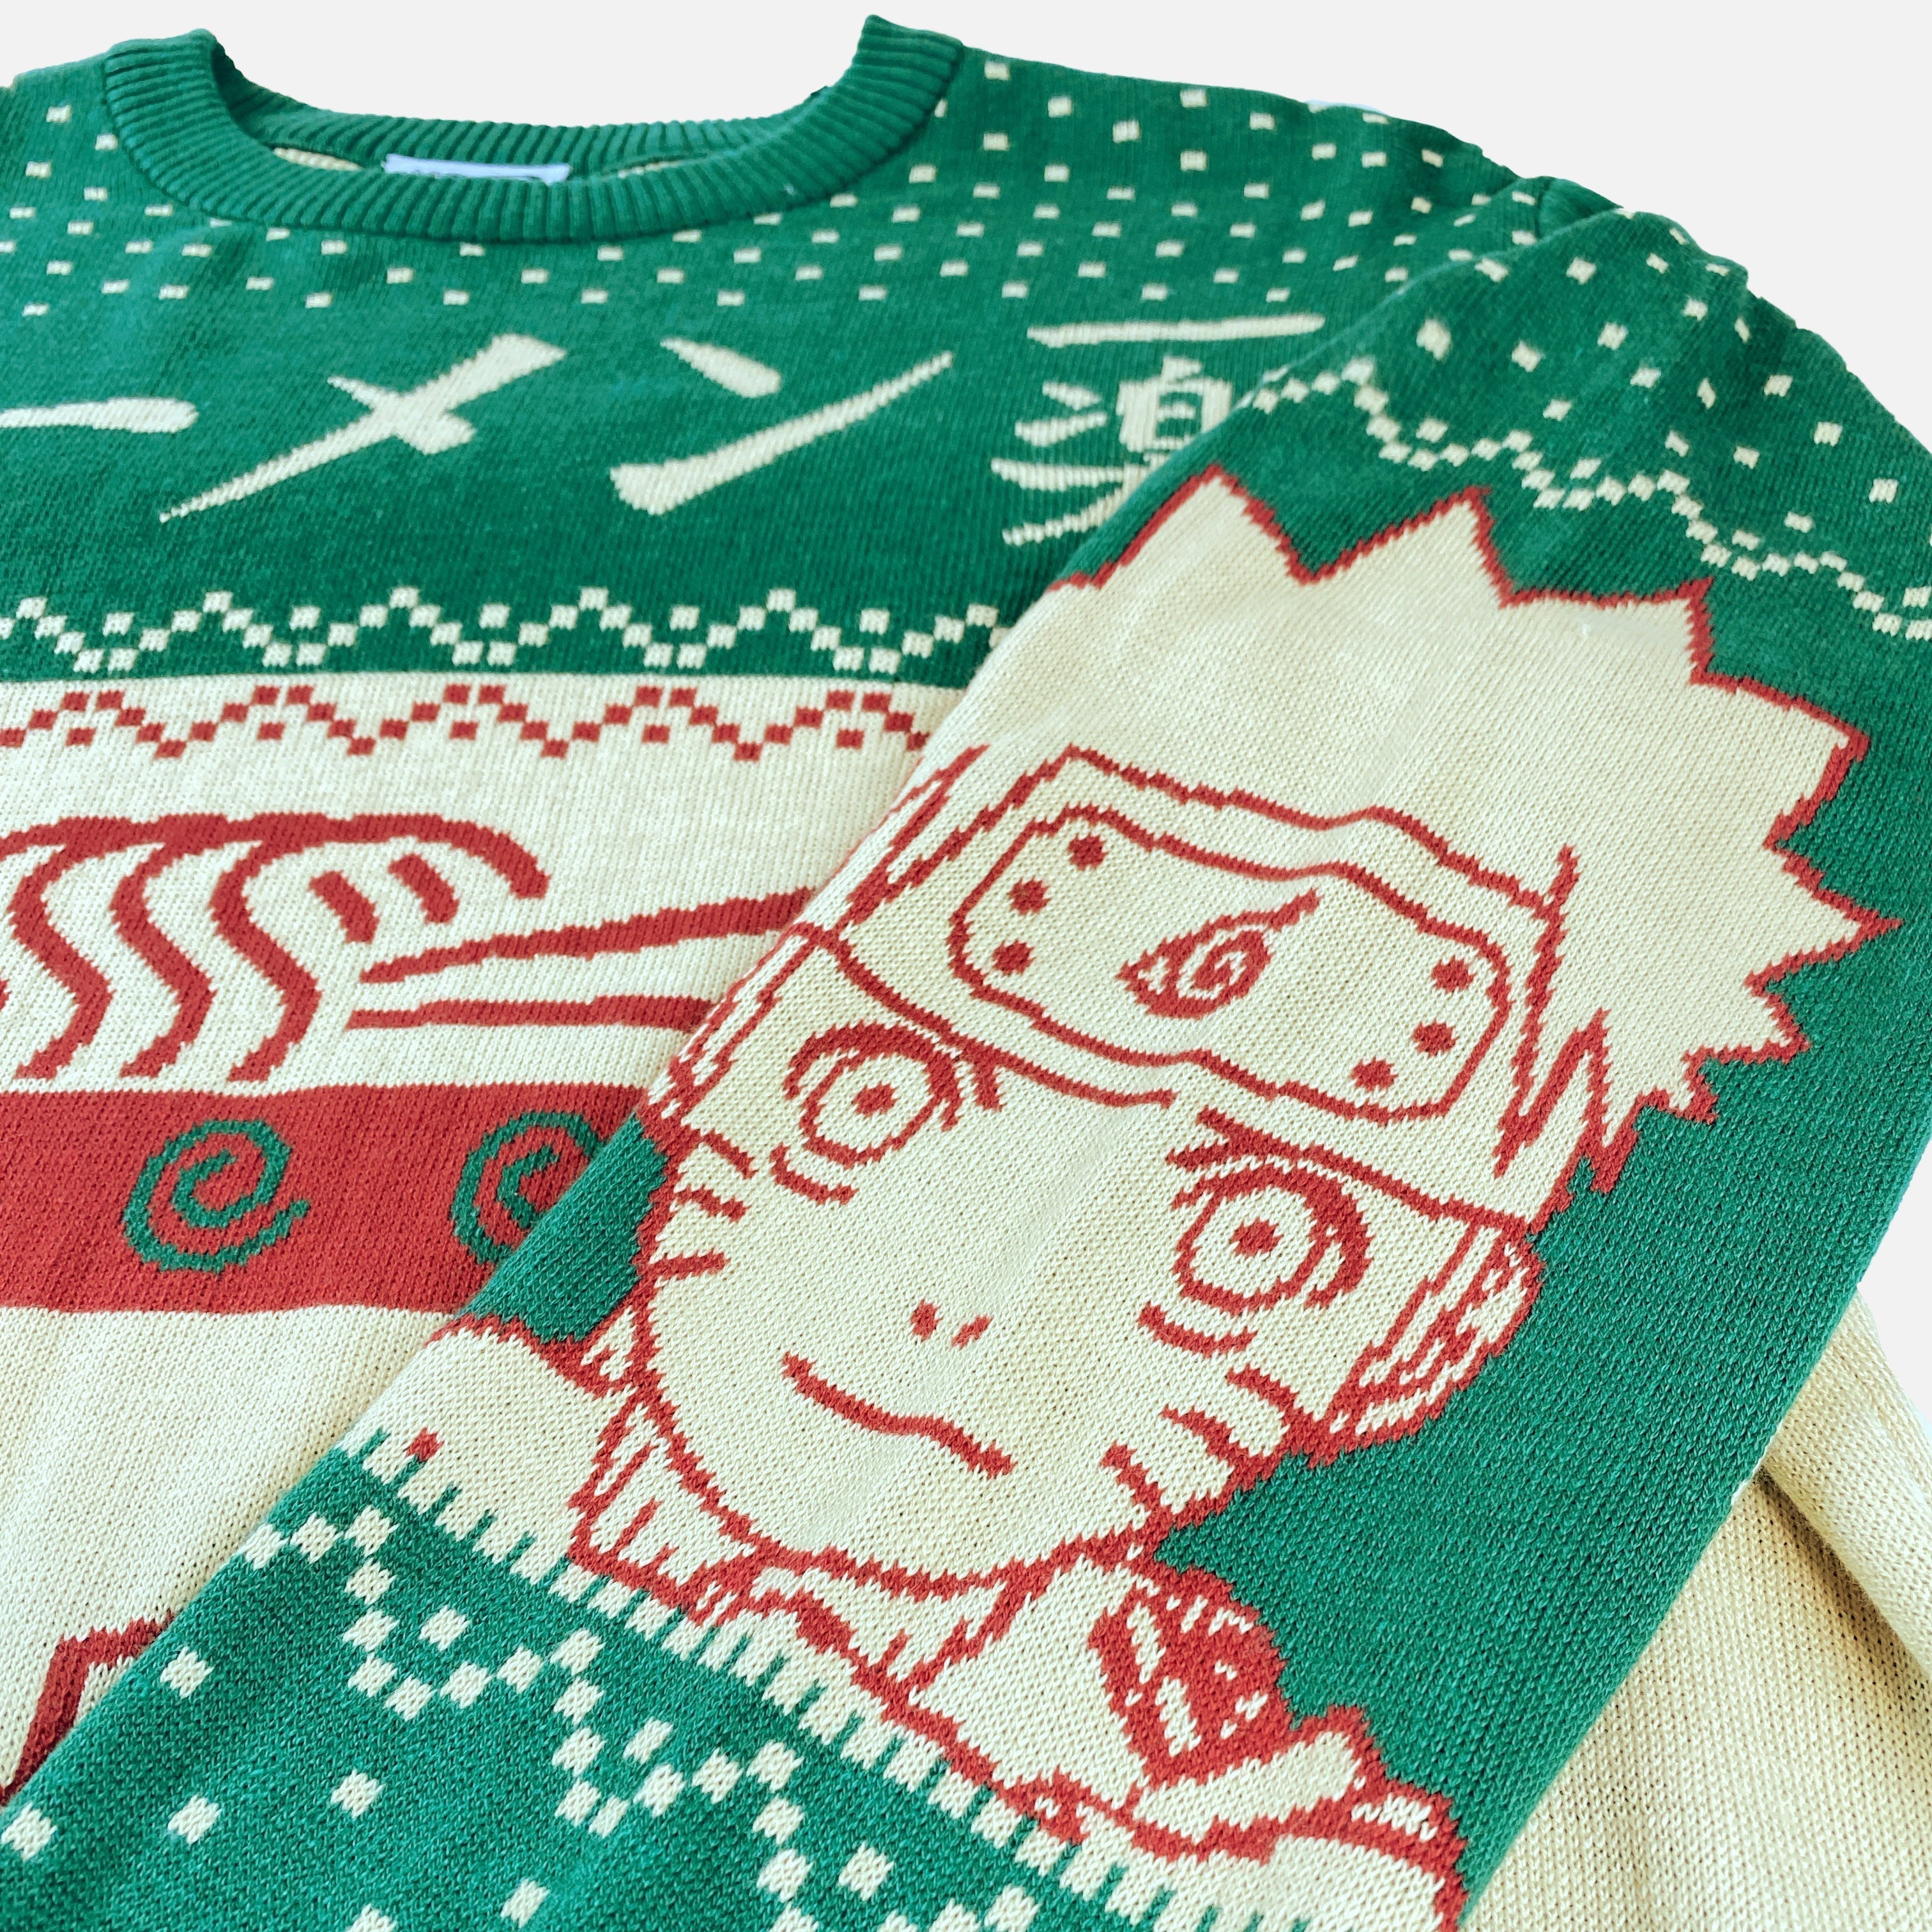 Naruto Shippuden - Ichiraku Ramen Shop Holiday Sweater - Crunchyroll Exclusive! image count 3